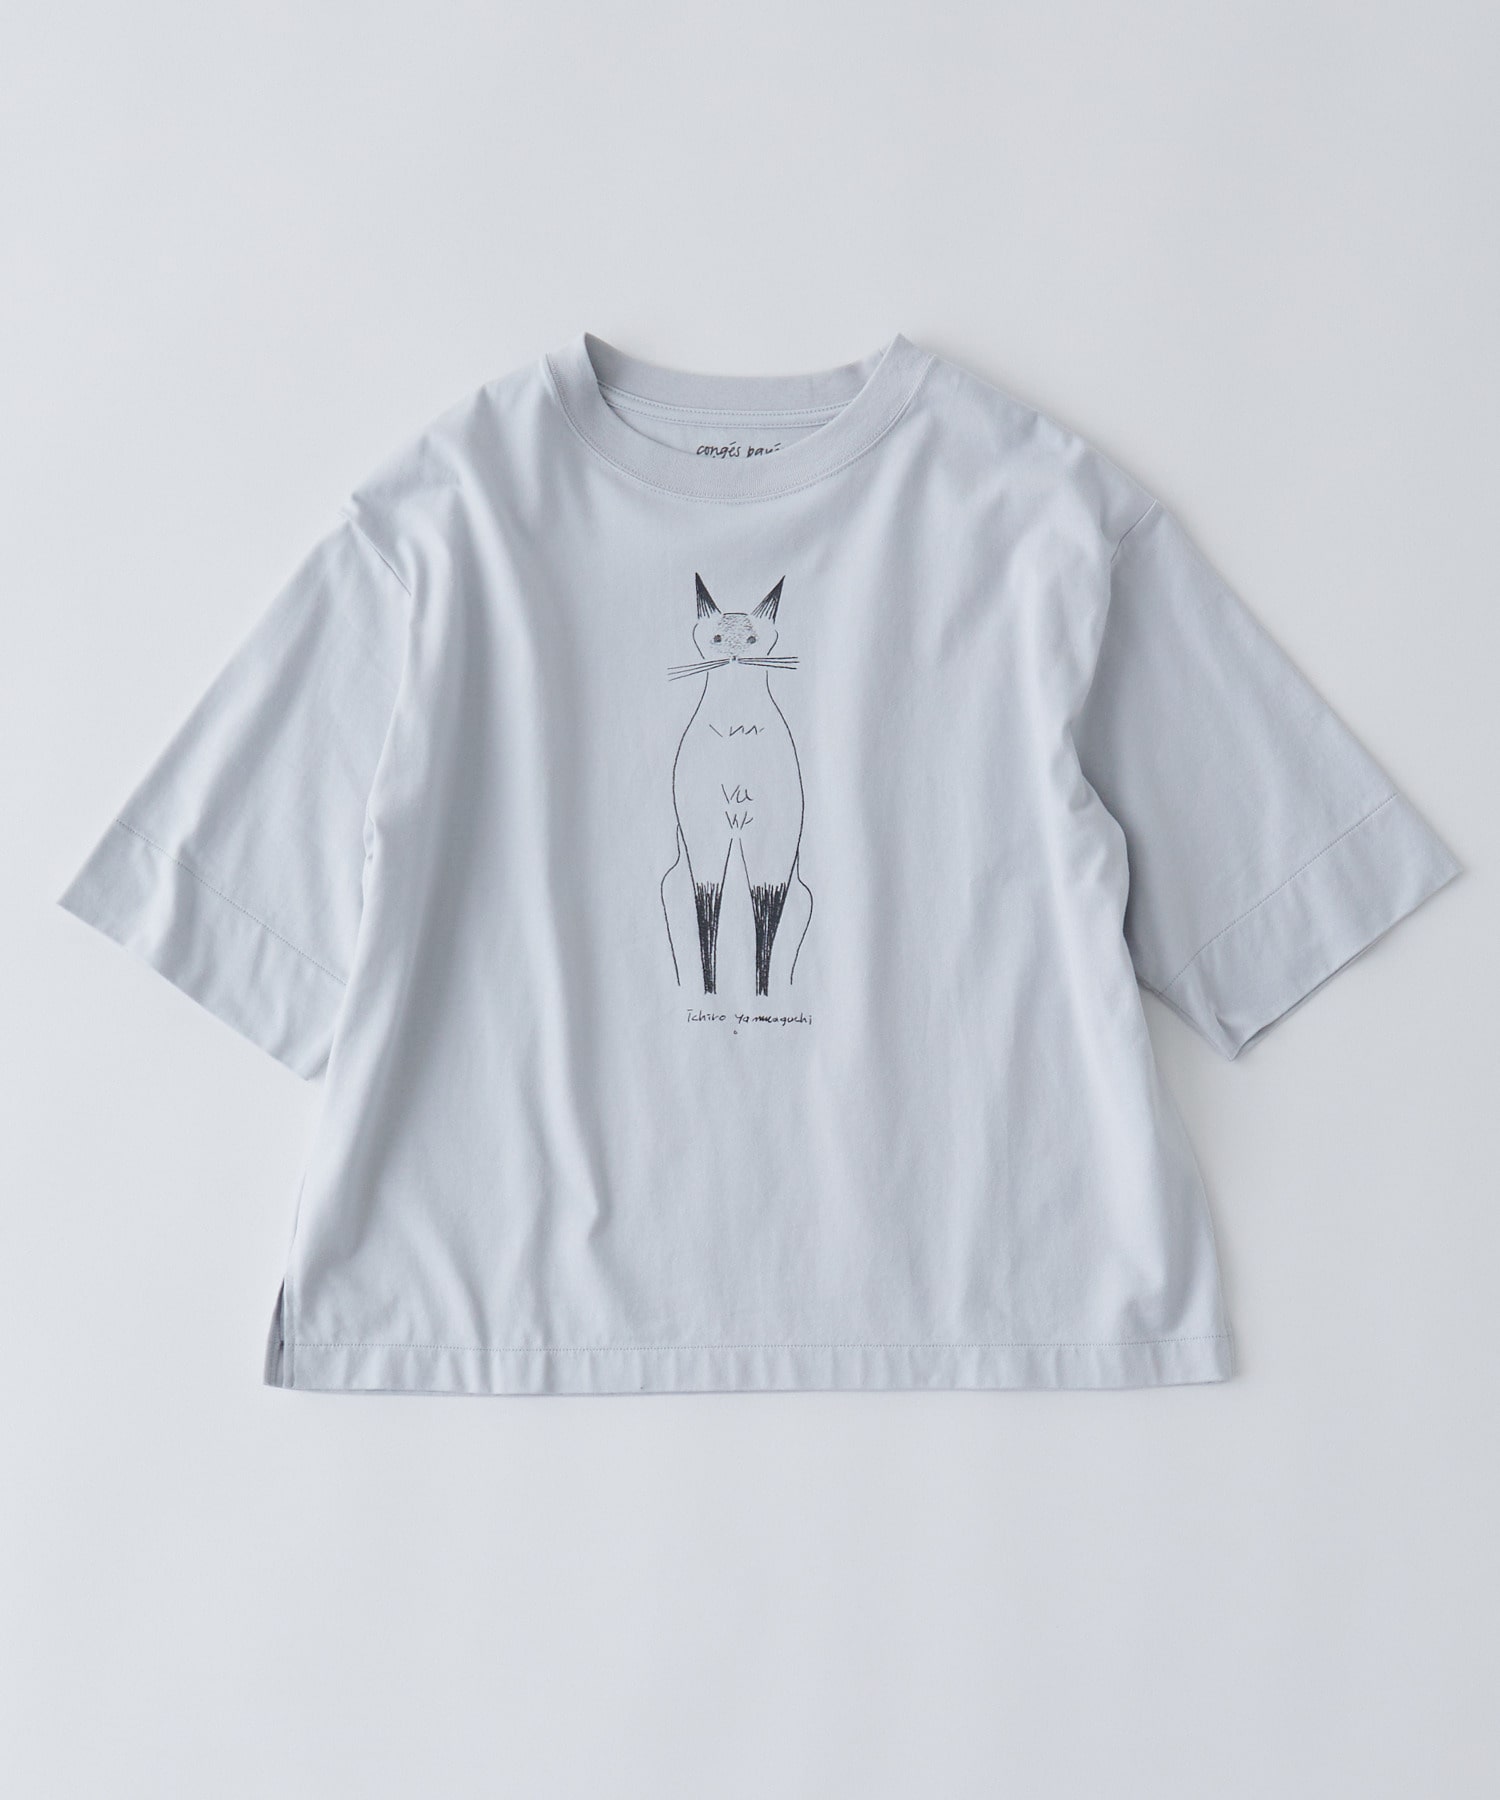 【congés payés】ichiro yamaguchi.半袖Tシャツ 詳細画像 ブルー 1